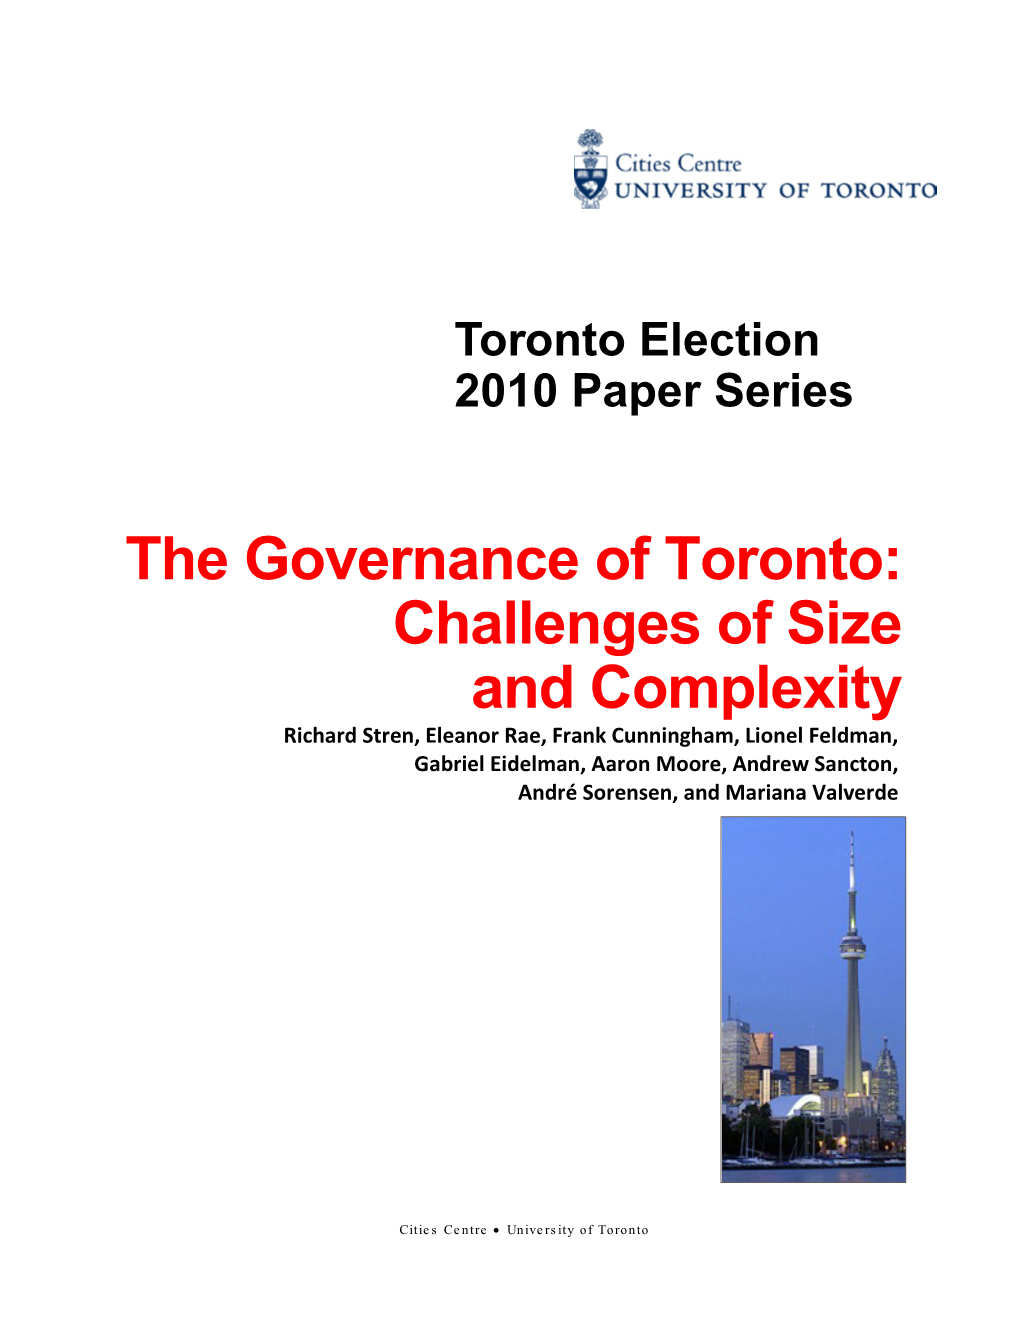 The Governance of Toronto